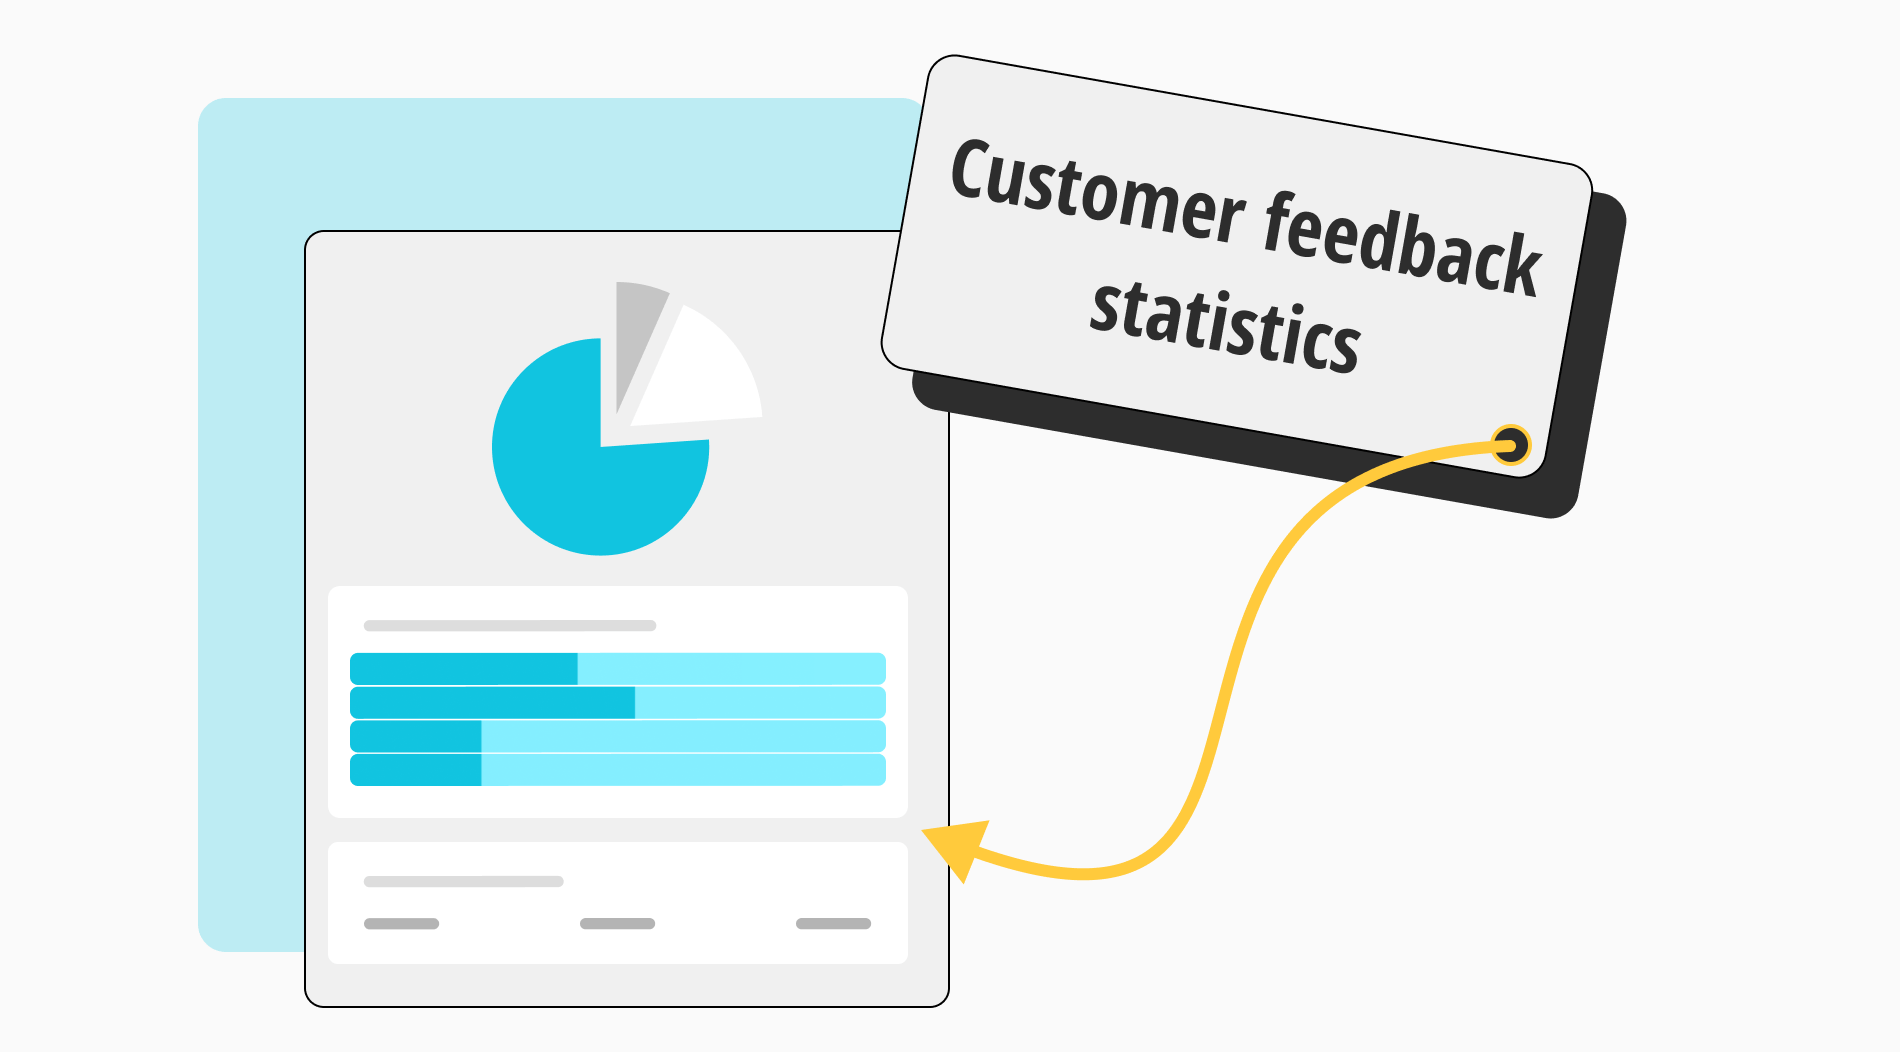 50+ Customer feedback statistics for great insights